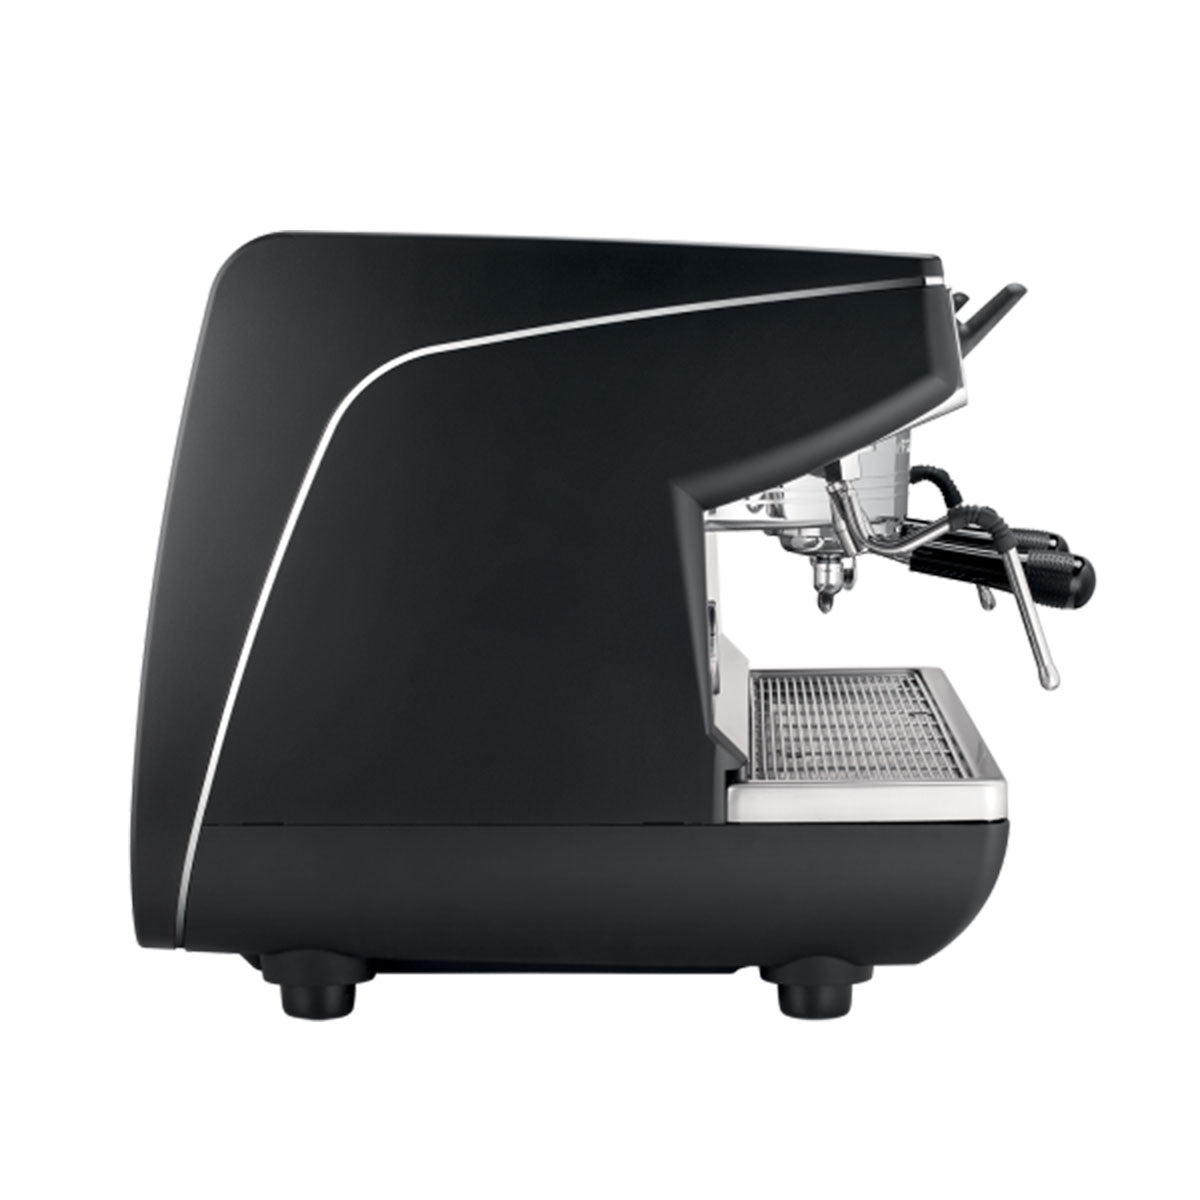 Melitta Avanza Series 600 Coffee Machine - Review — Her Favourite